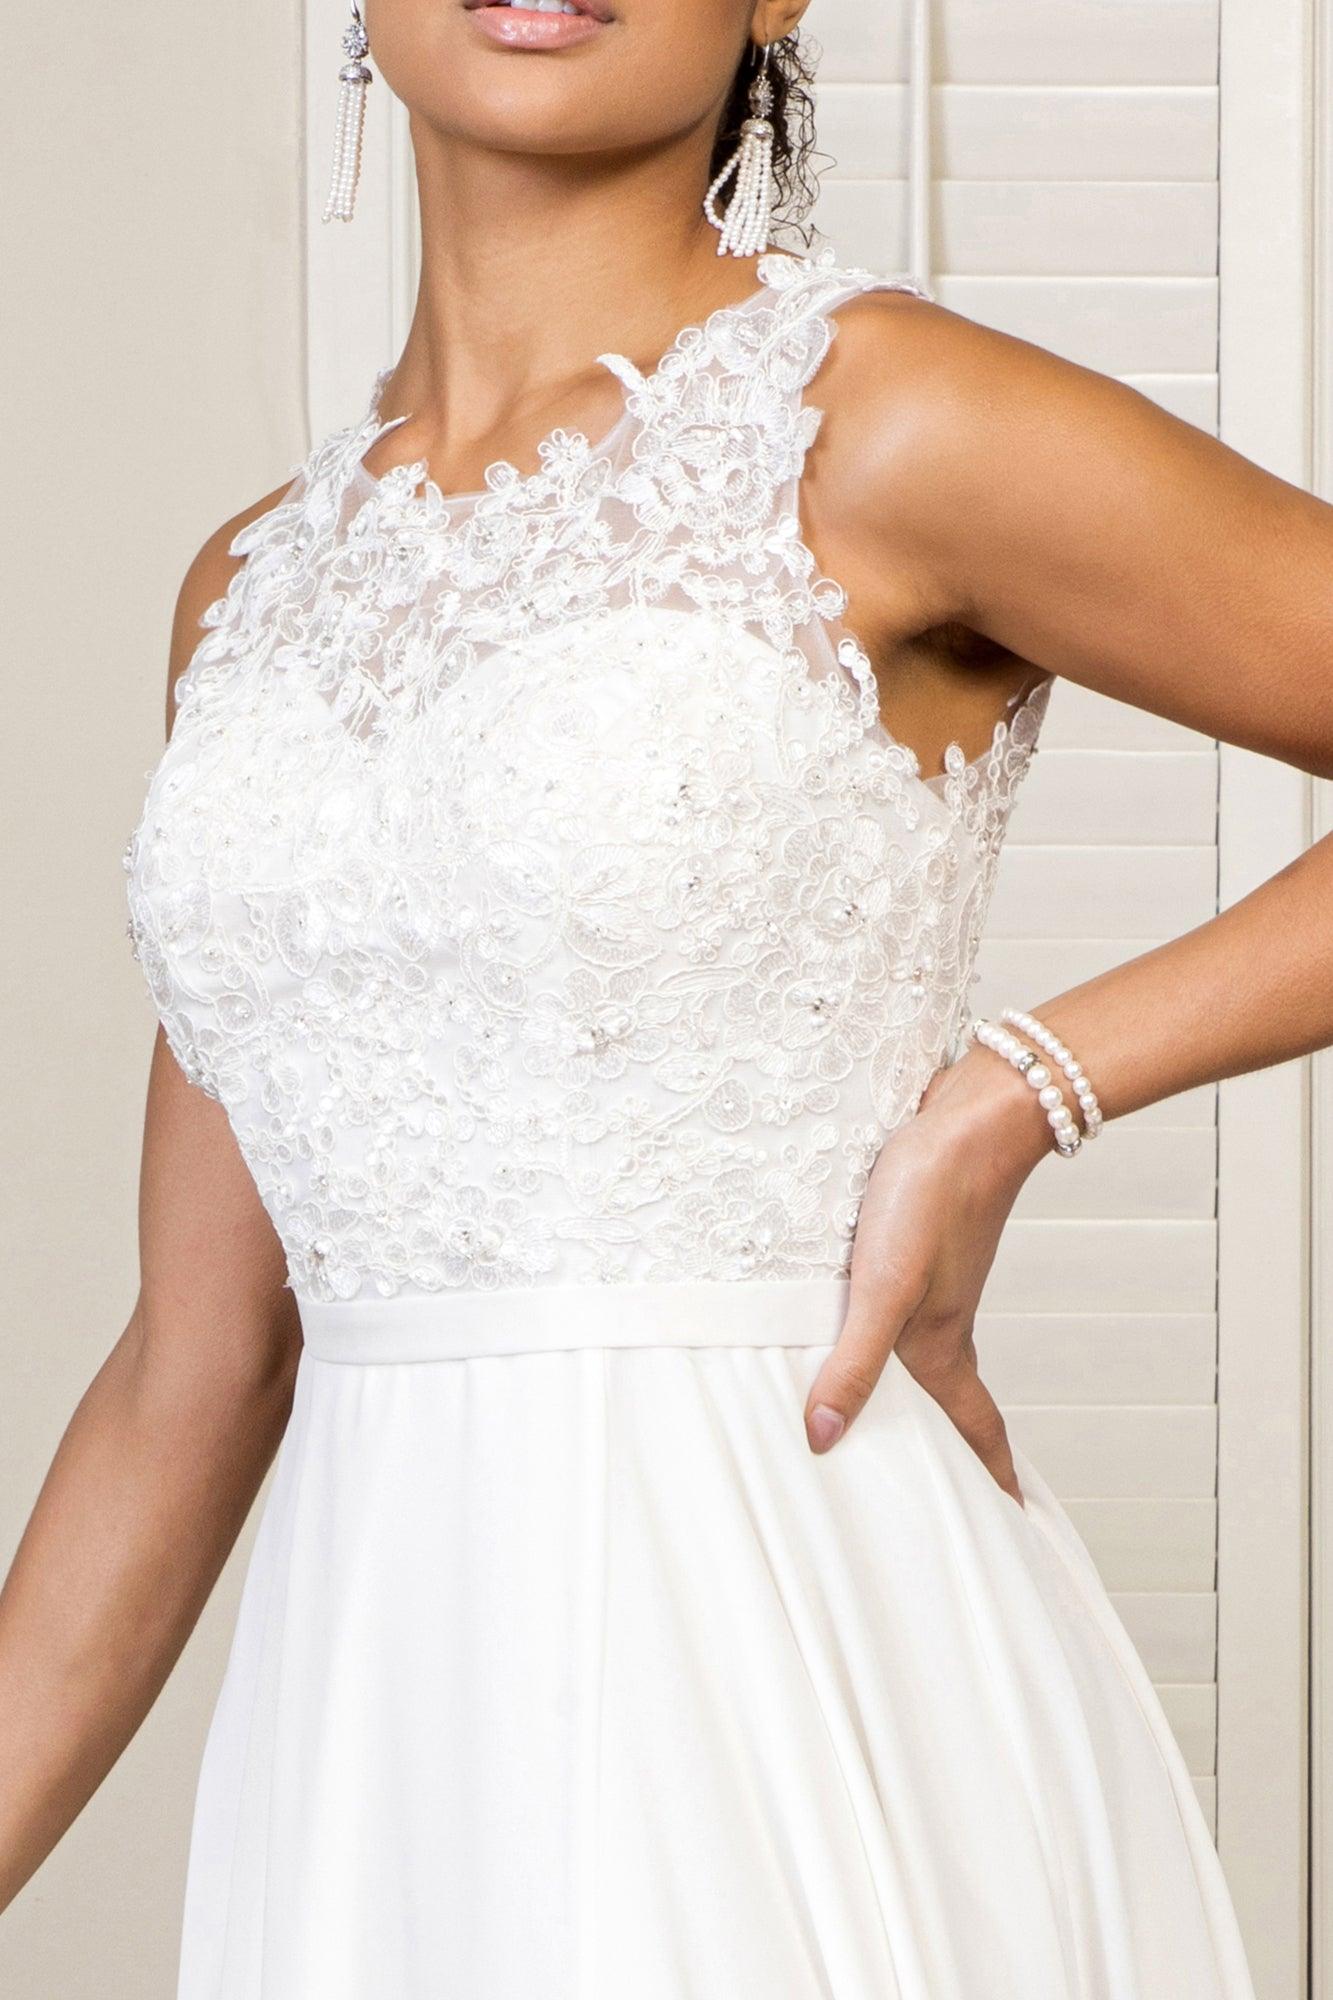 Bridal Long Sleeveless Chiffon Wedding Dress - The Dress Outlet